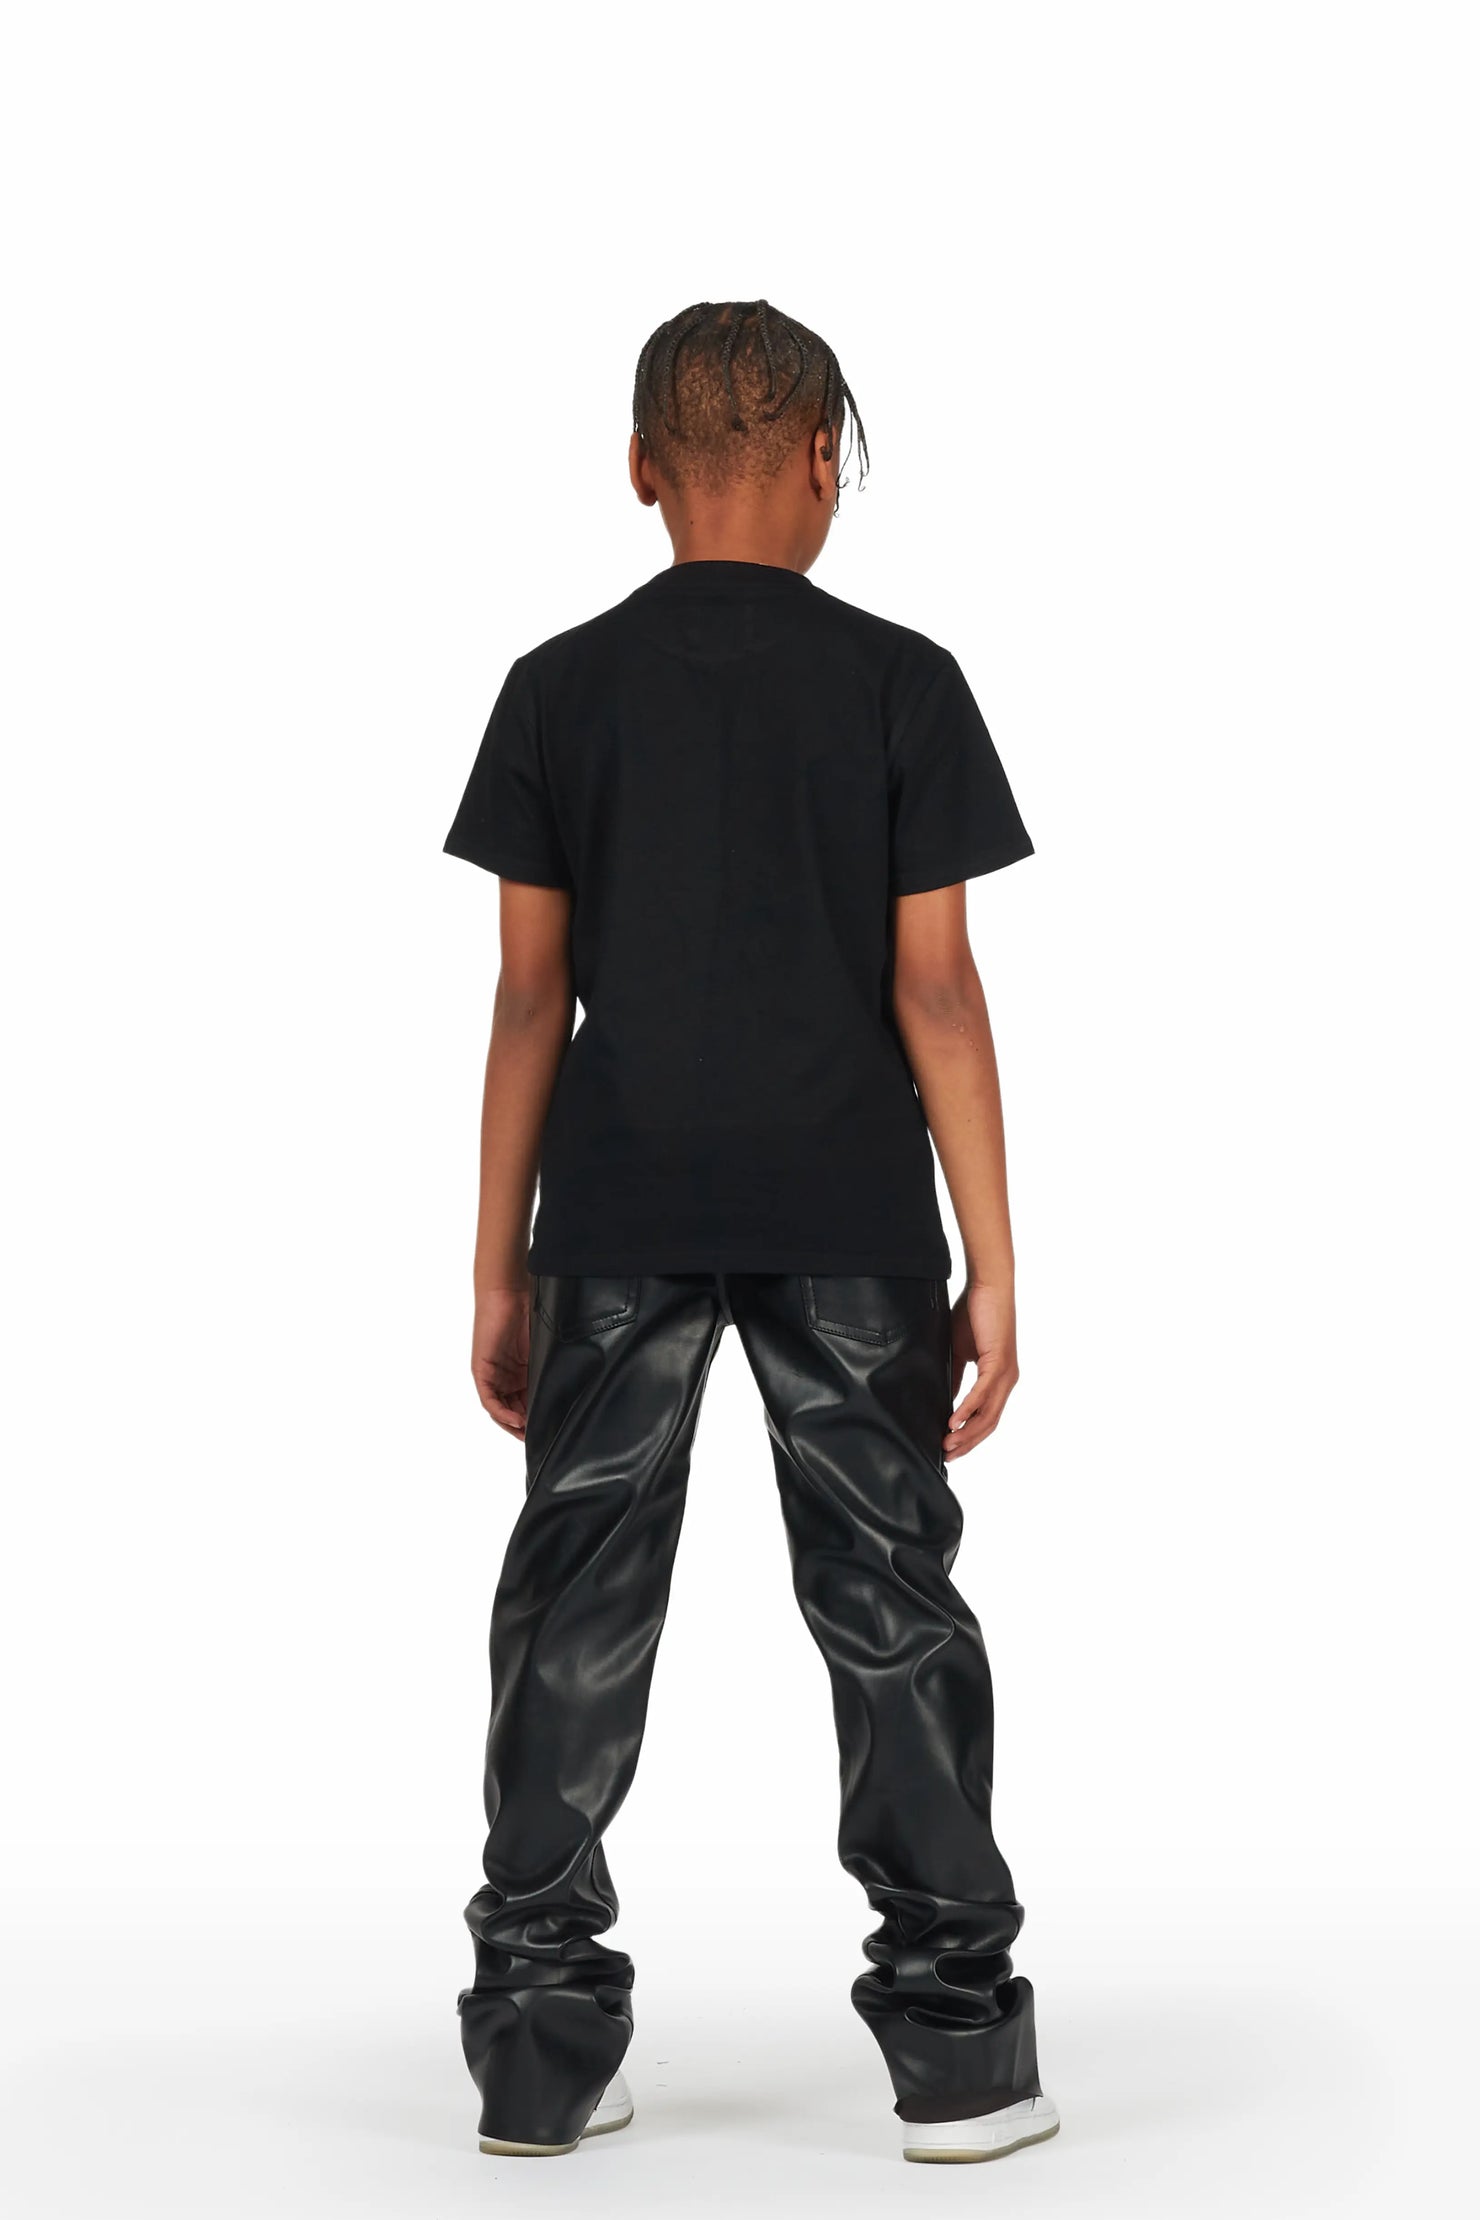 Boys Hades Black T-Shirt/Super Stacked Flare PU Jean Set